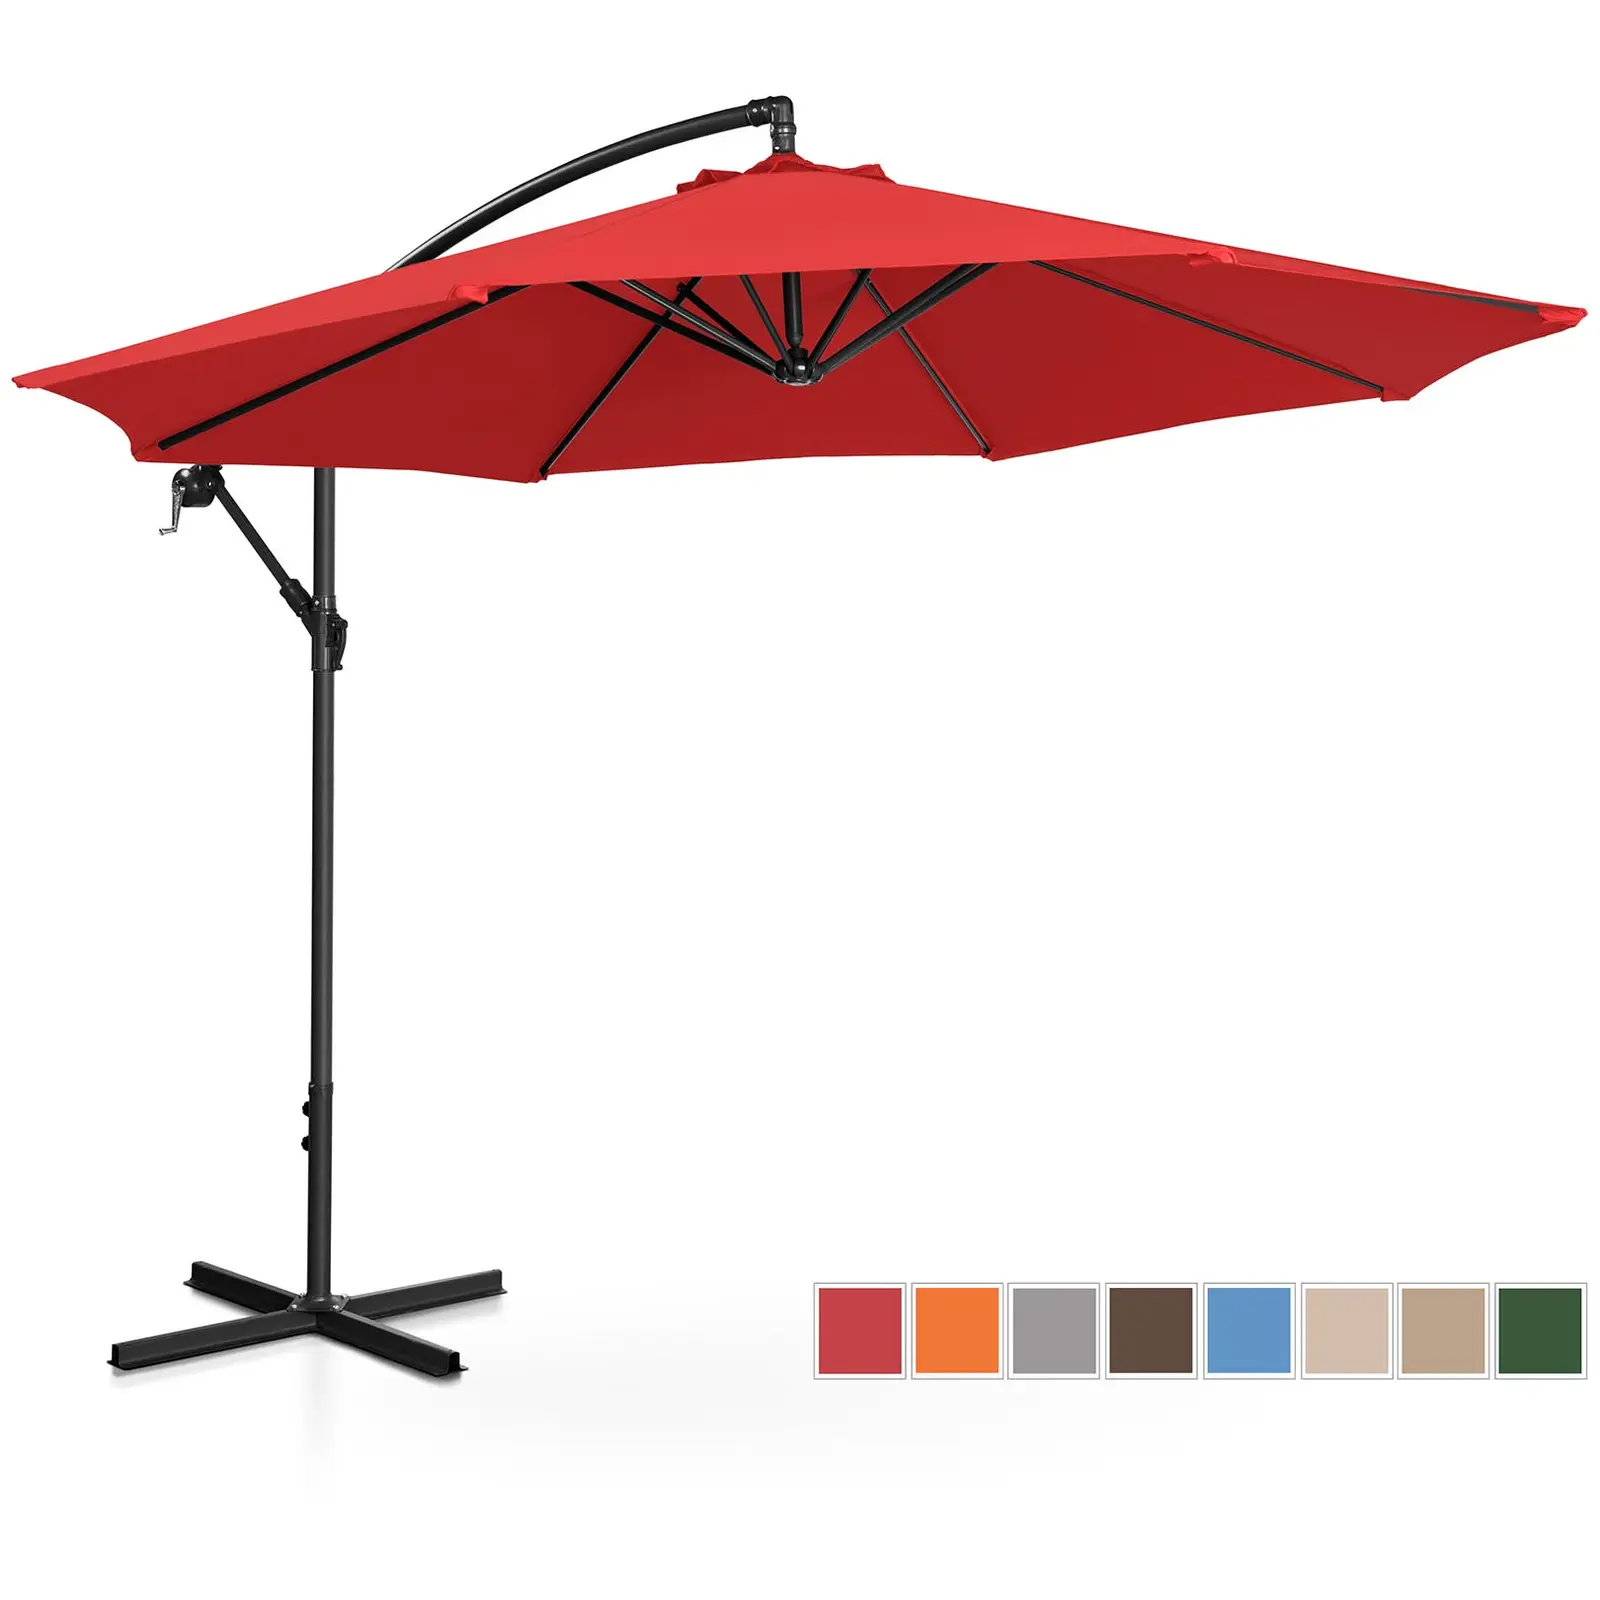 B-varer Hageparaply - rød - rund - Ø 300 cm - vippbar